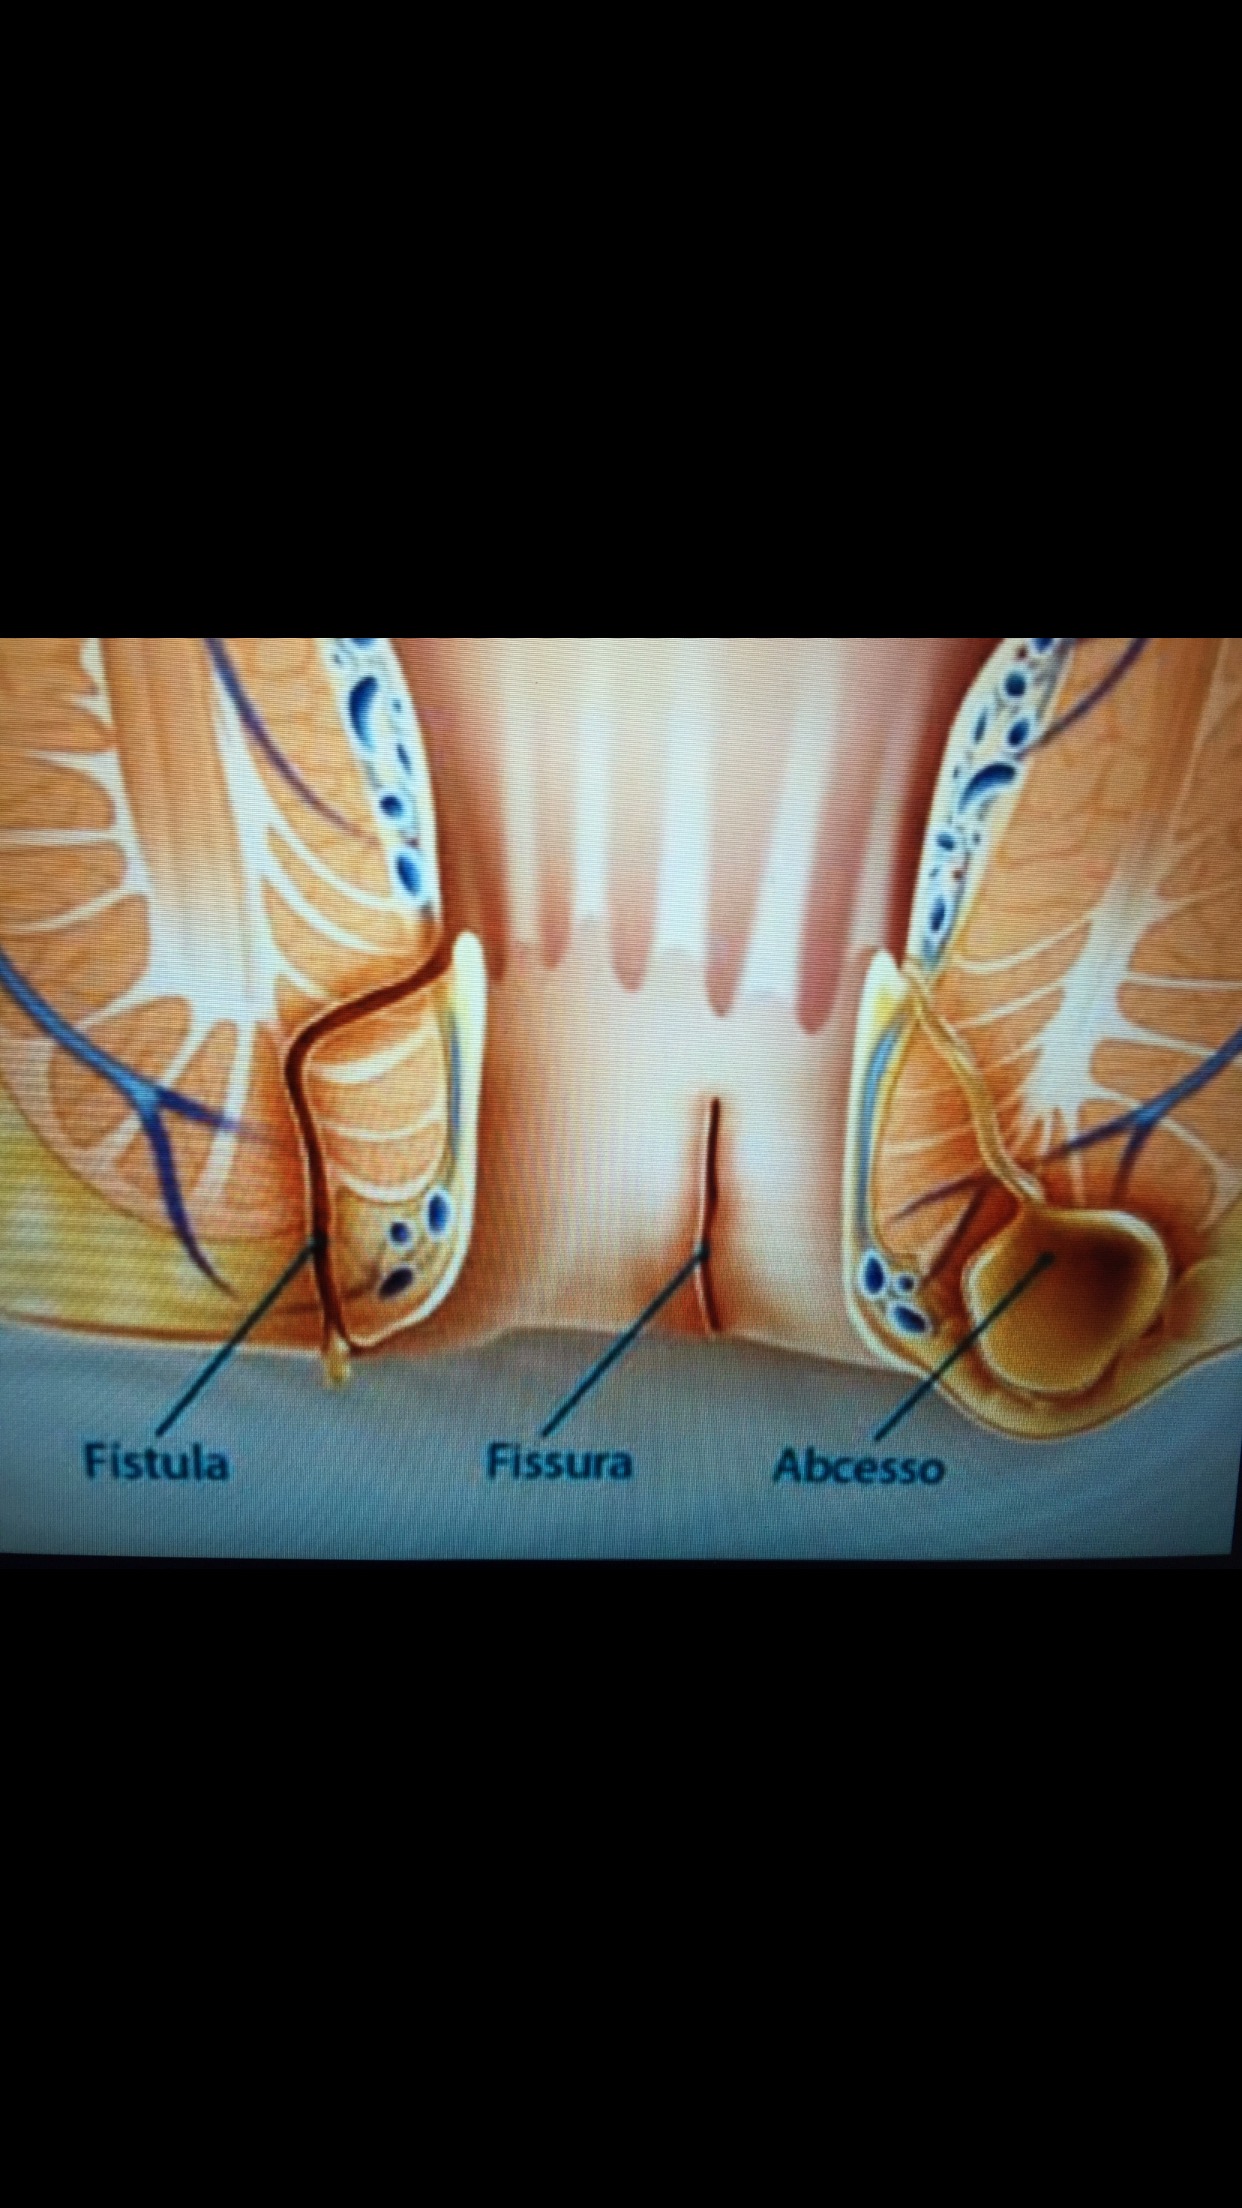 anatomia do ânus e do canal anal